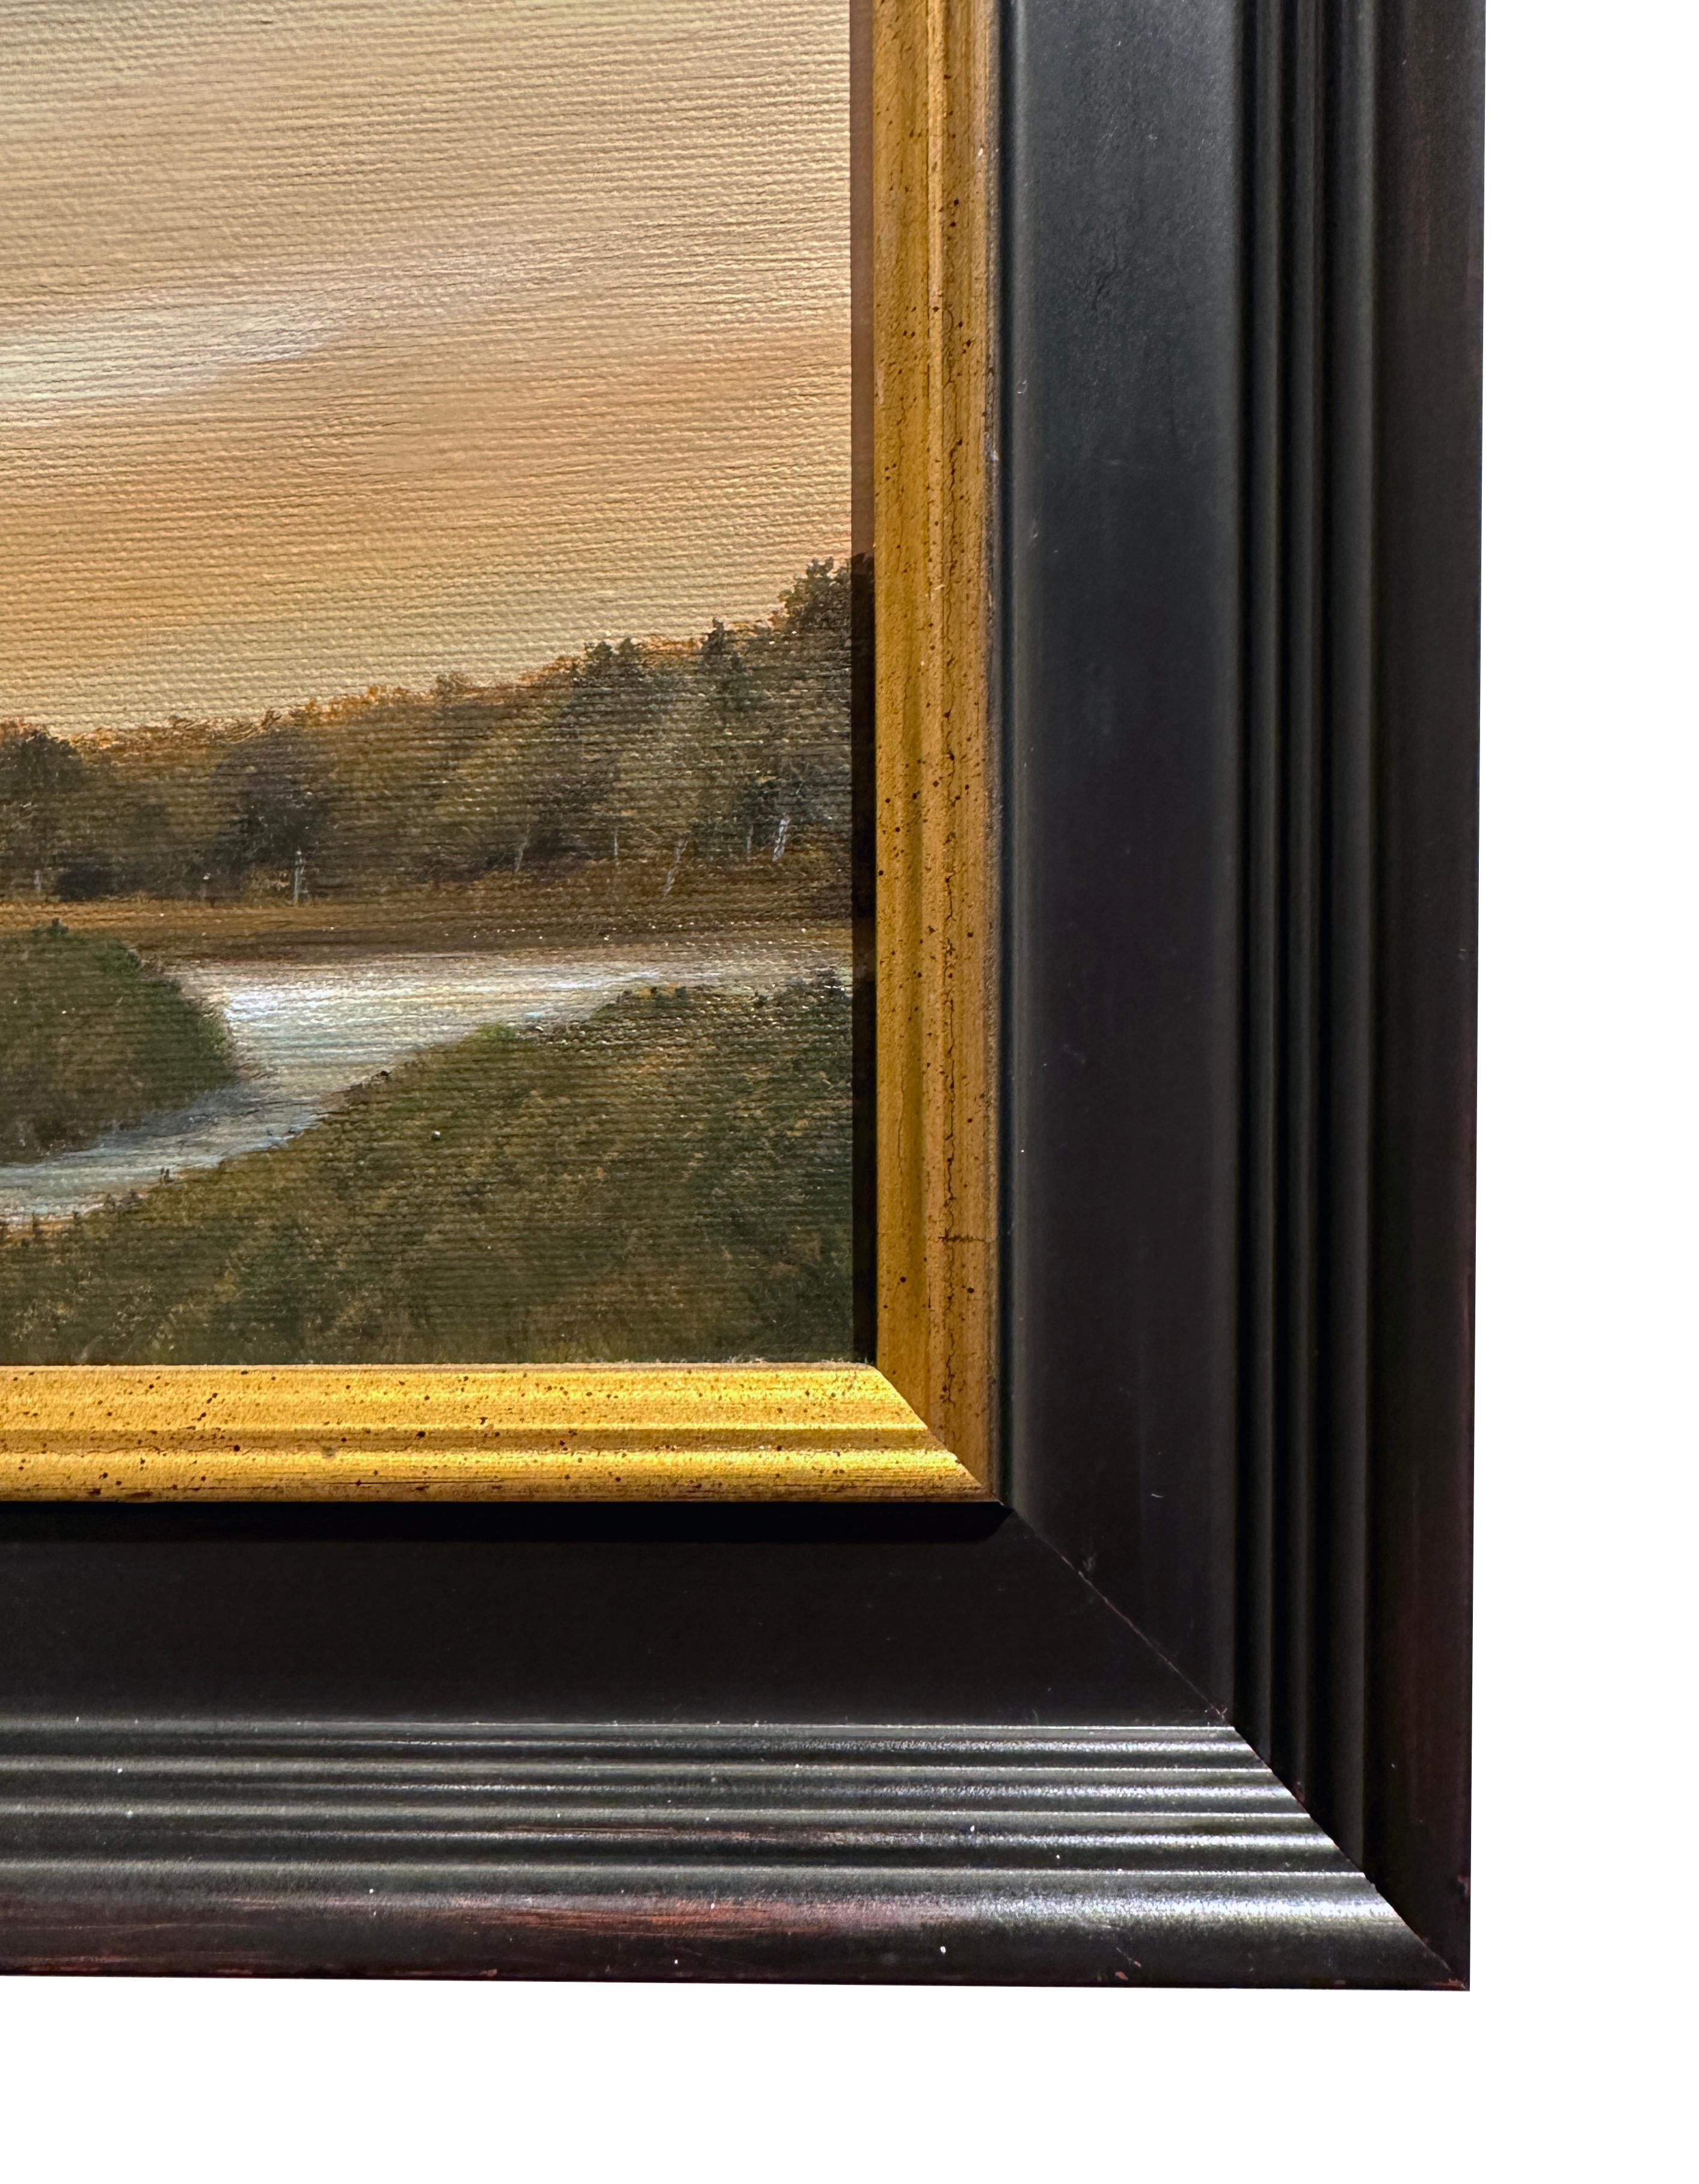 Untitled - Original Oil Painting, Dramatic Sunset, Landscape 2